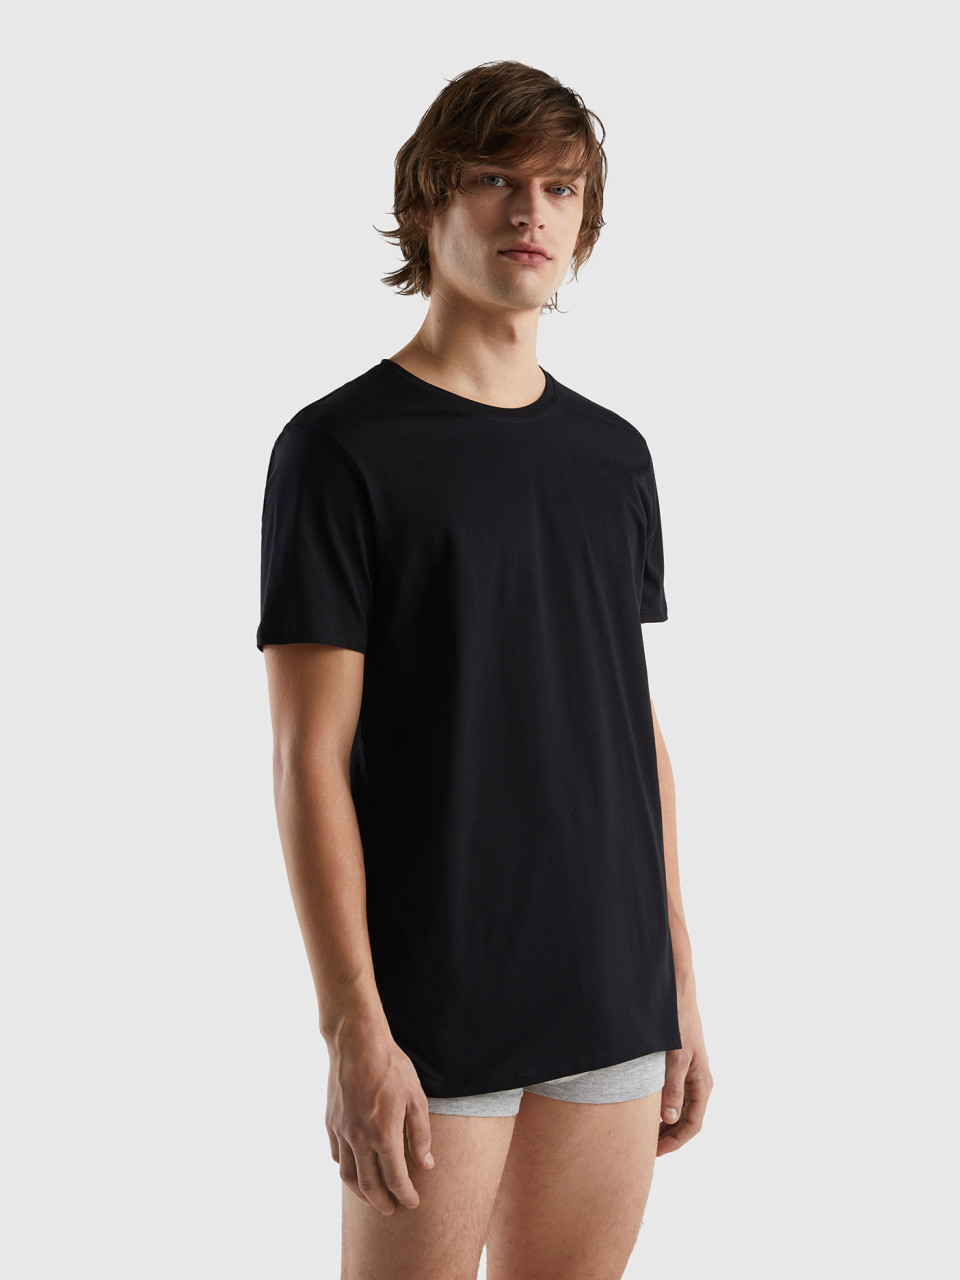 Benetton, Long Fiber Cotton T-shirt, Black, Men